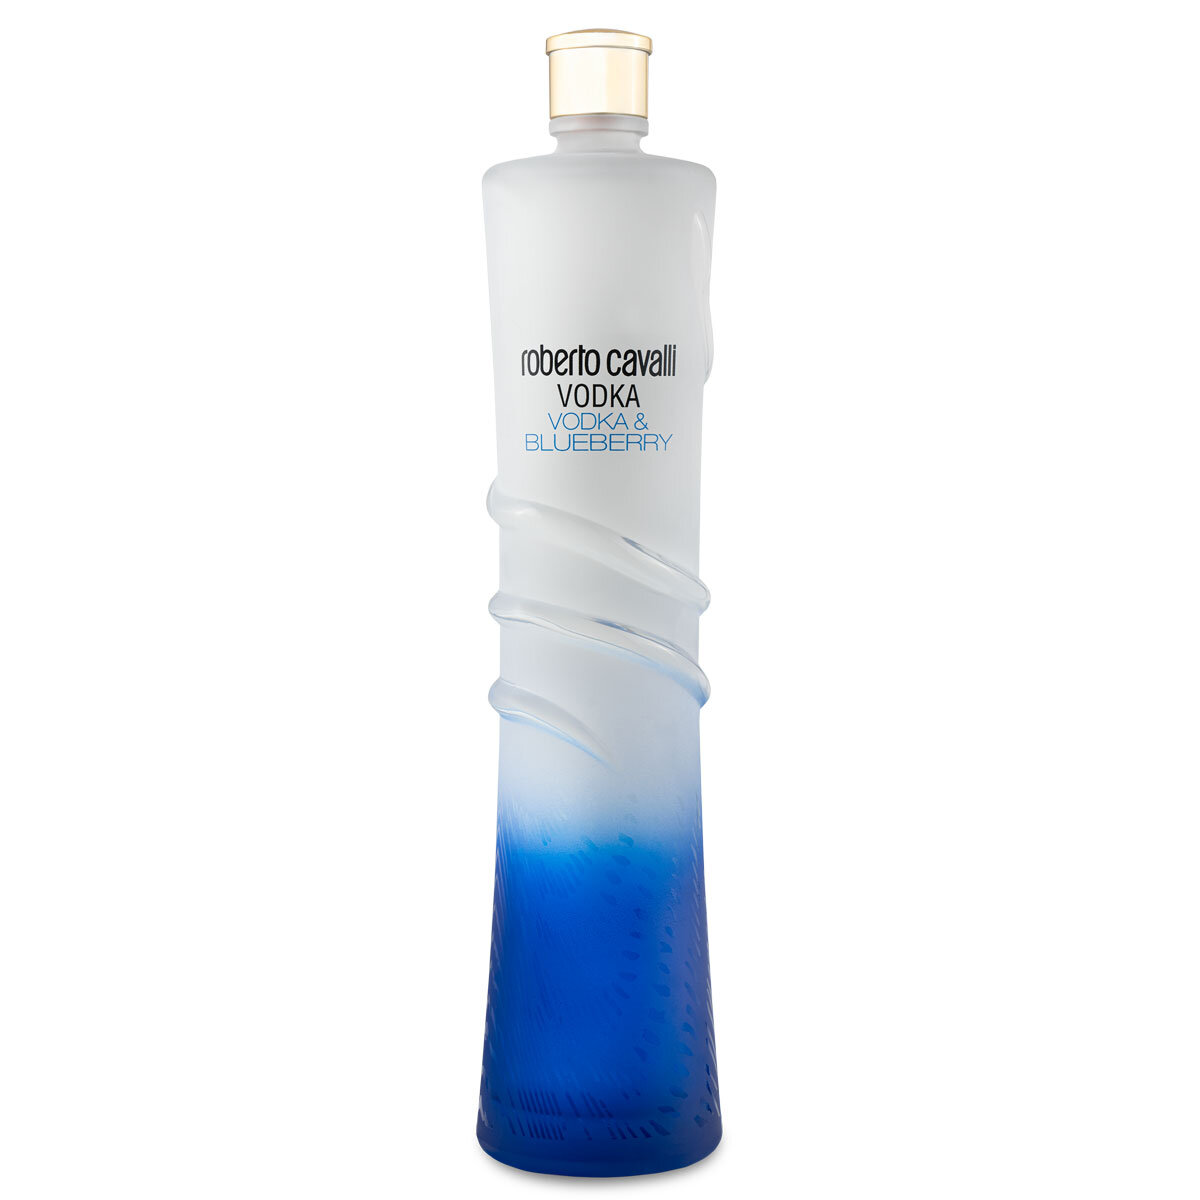 Roberto Cavalli Blueberry Vodka, 1L | Costco UK